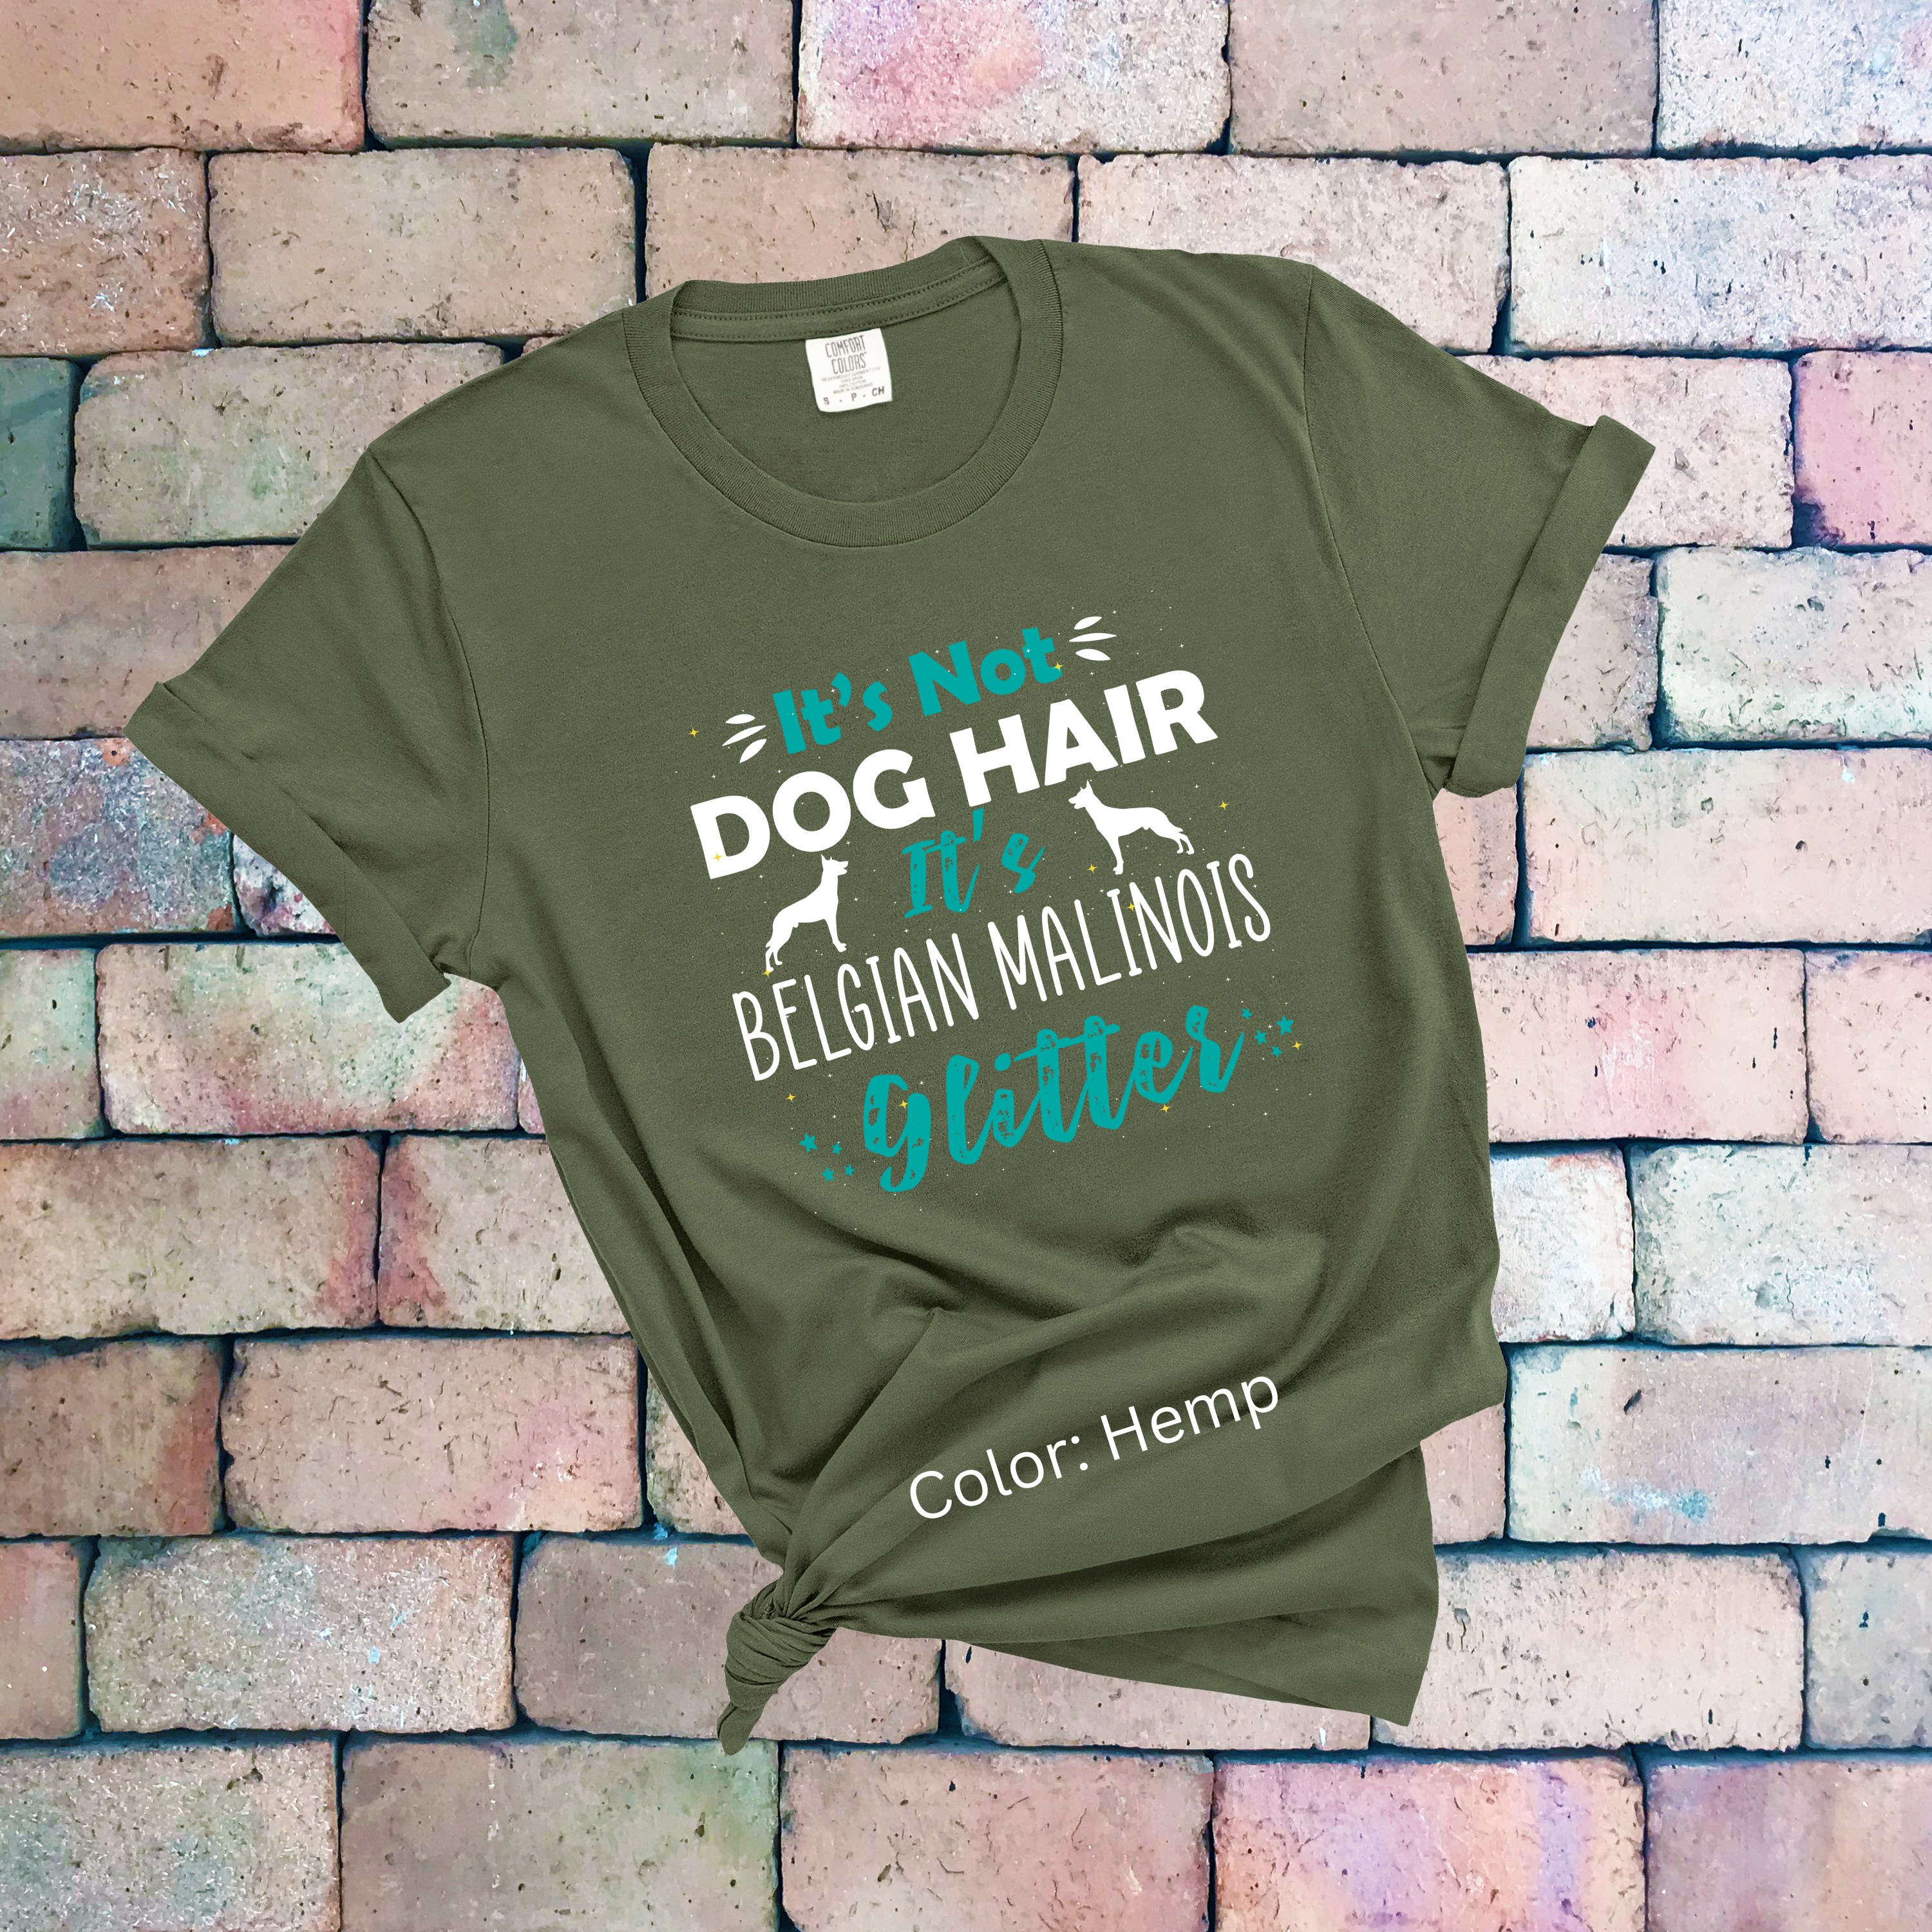 It's Not Dog Hair, It's Belgian Malinois Glitter Comfort Colors T-shirt - Dog Lover Tee